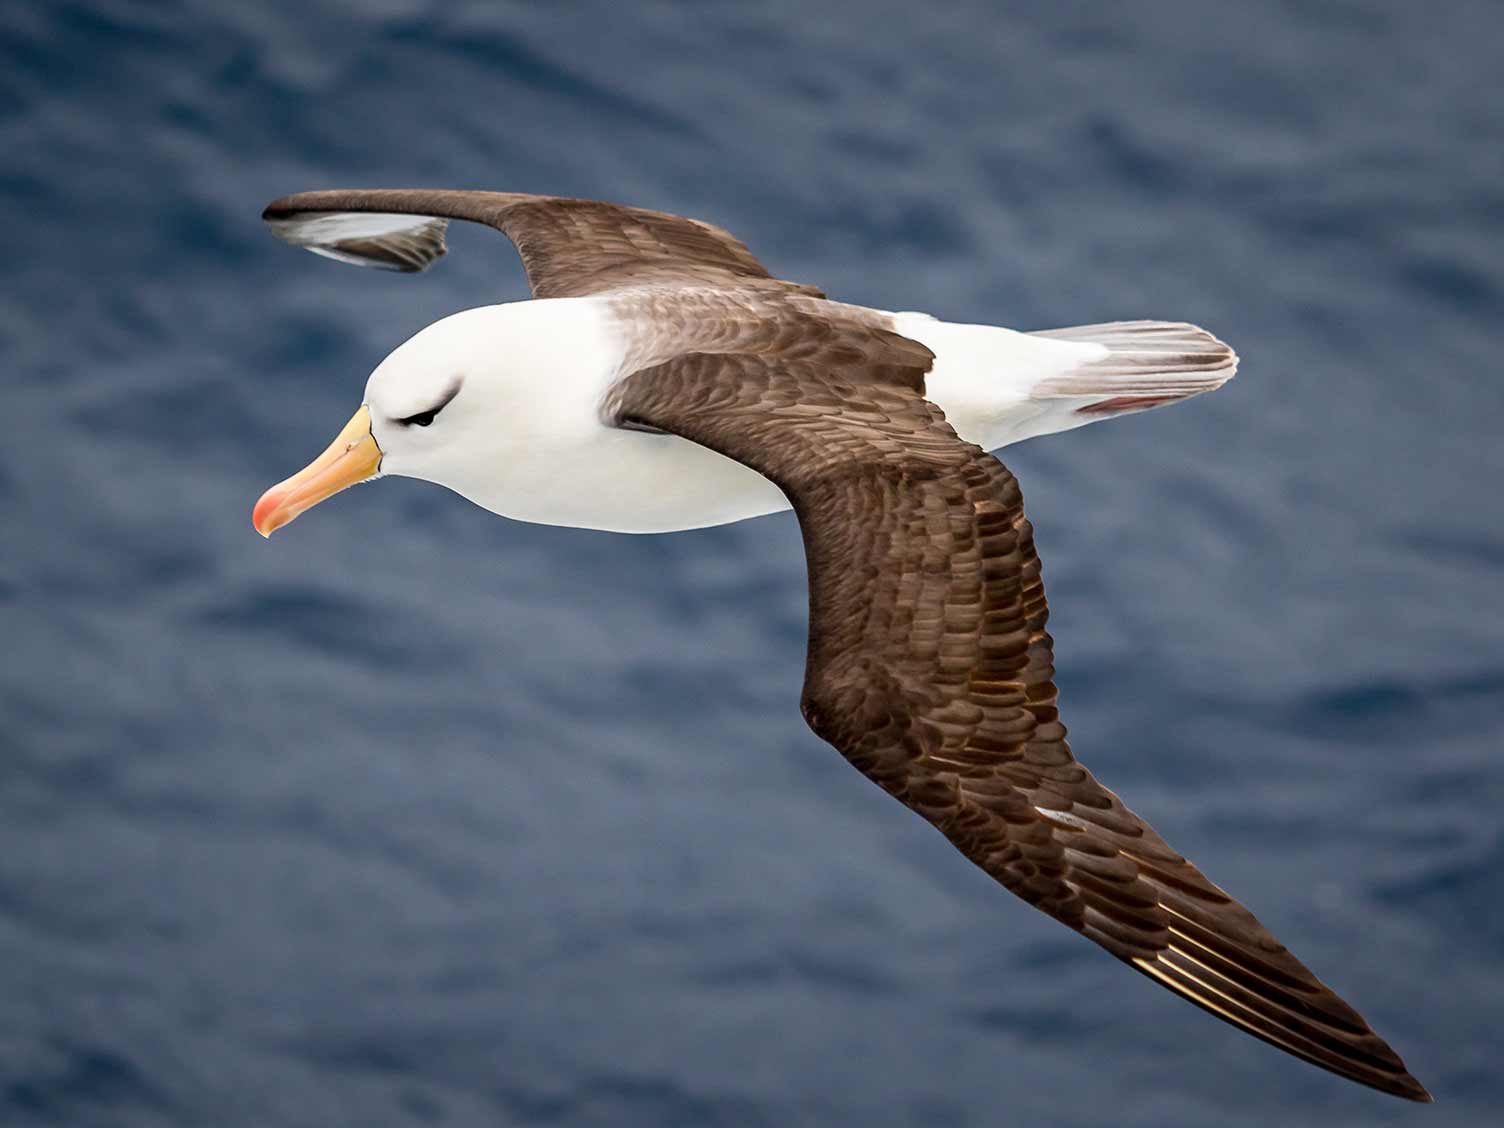 Black-browed albatross